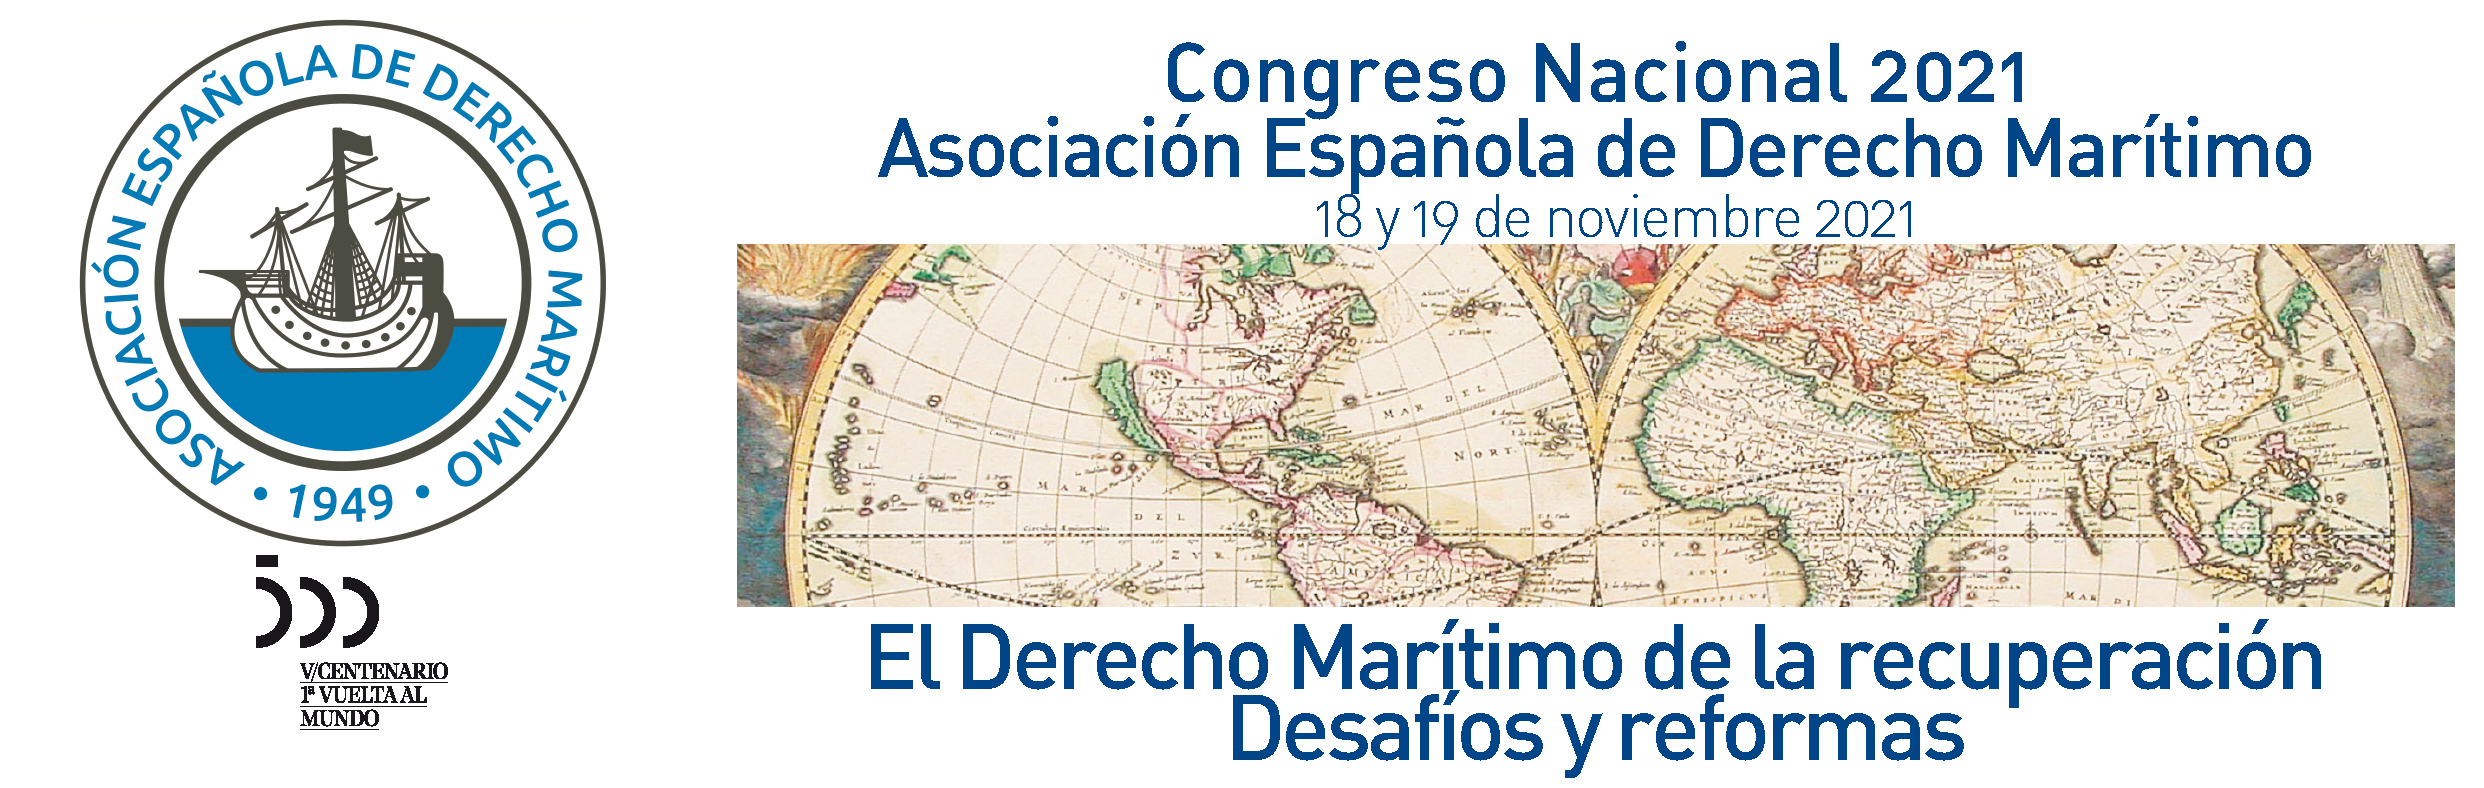 Congreso Nacional de Derecho Marítimo 2021